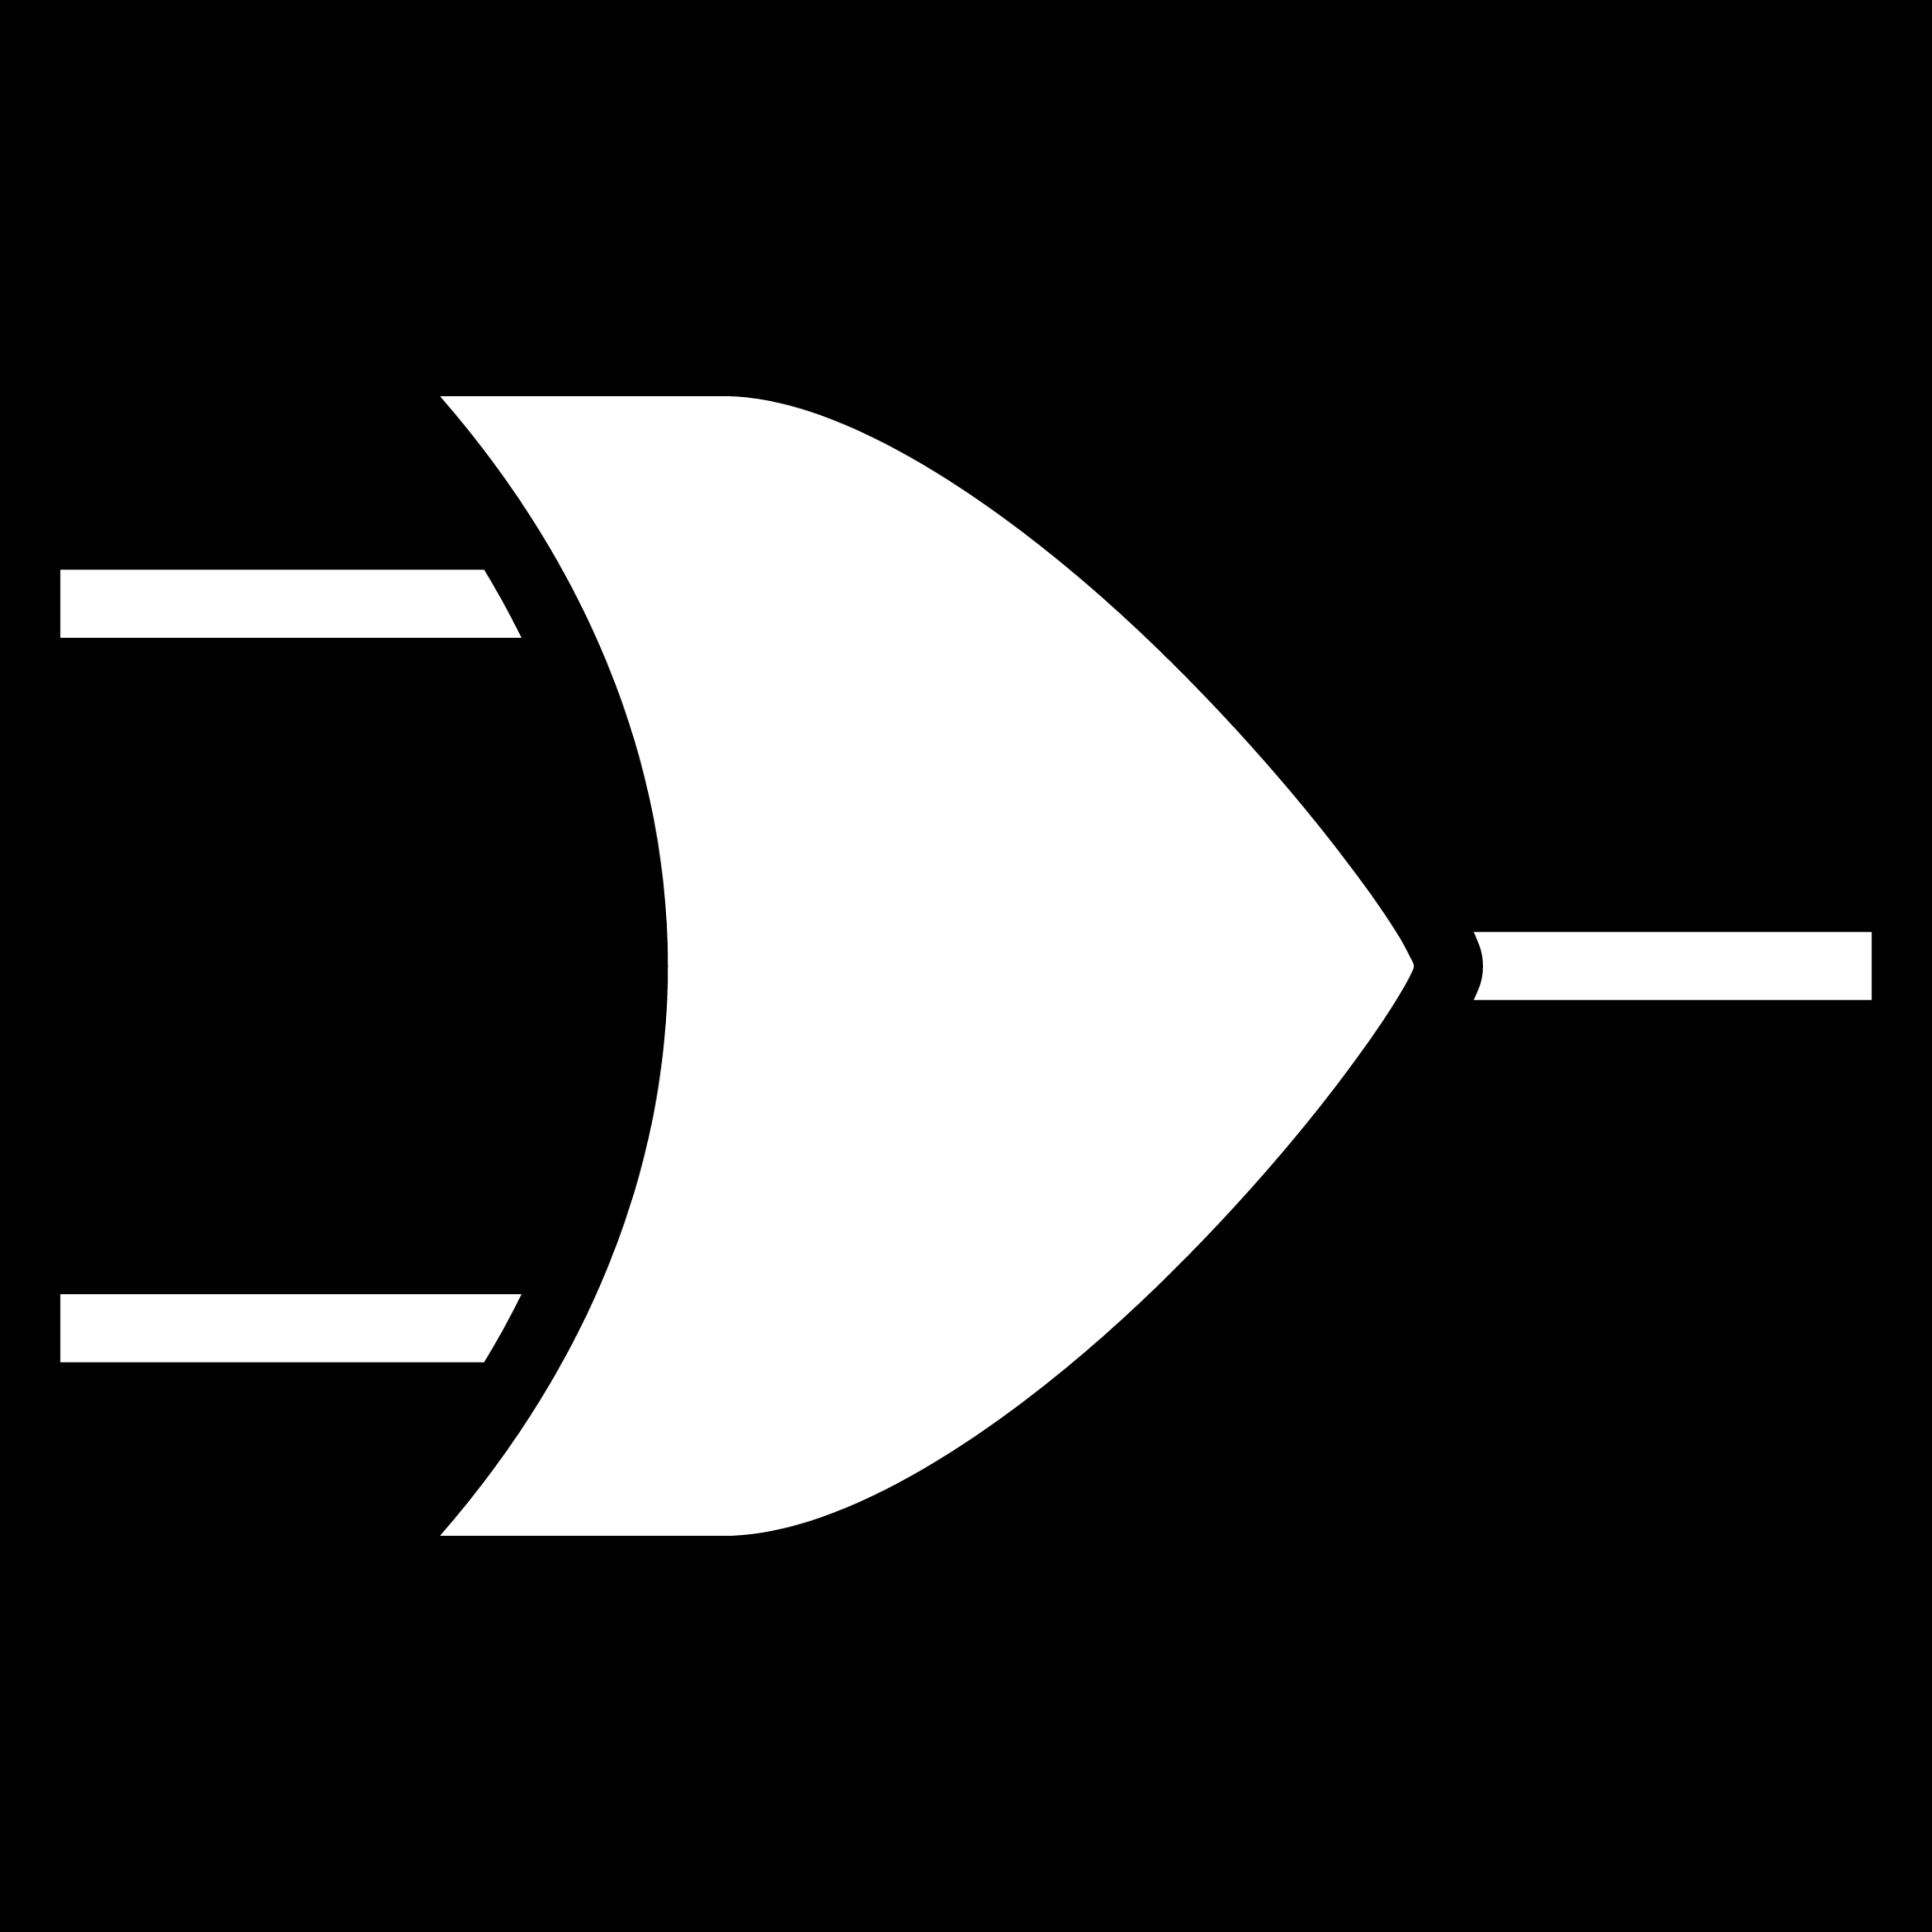 logic gate or icon